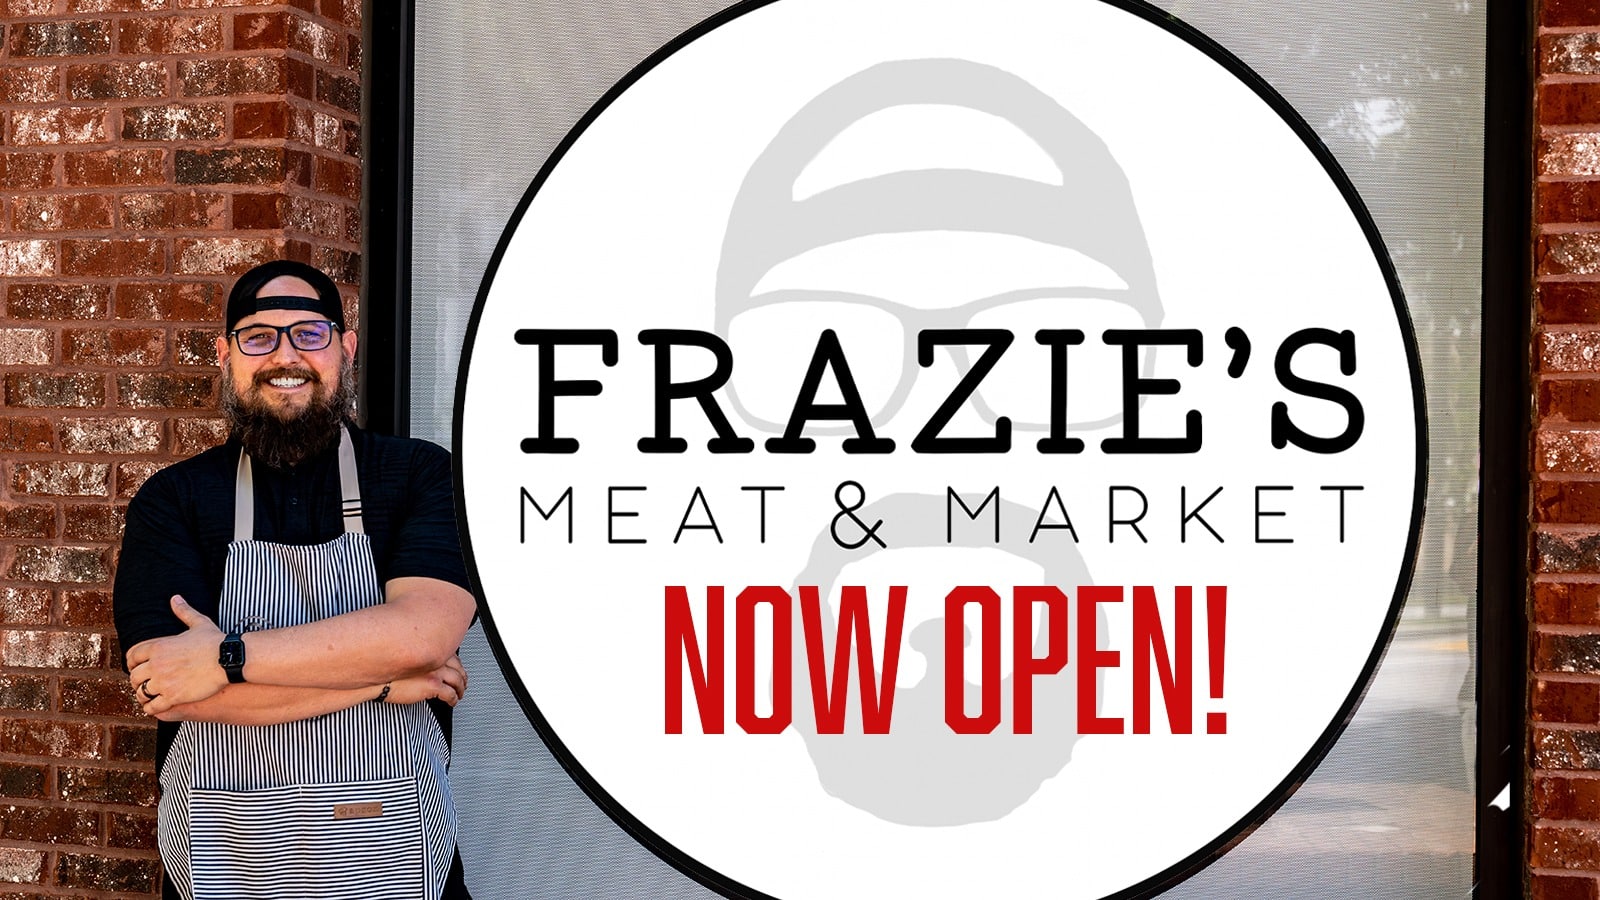 Frazie's Meat & Market | frazies meat and market butcher shop promosnoe open